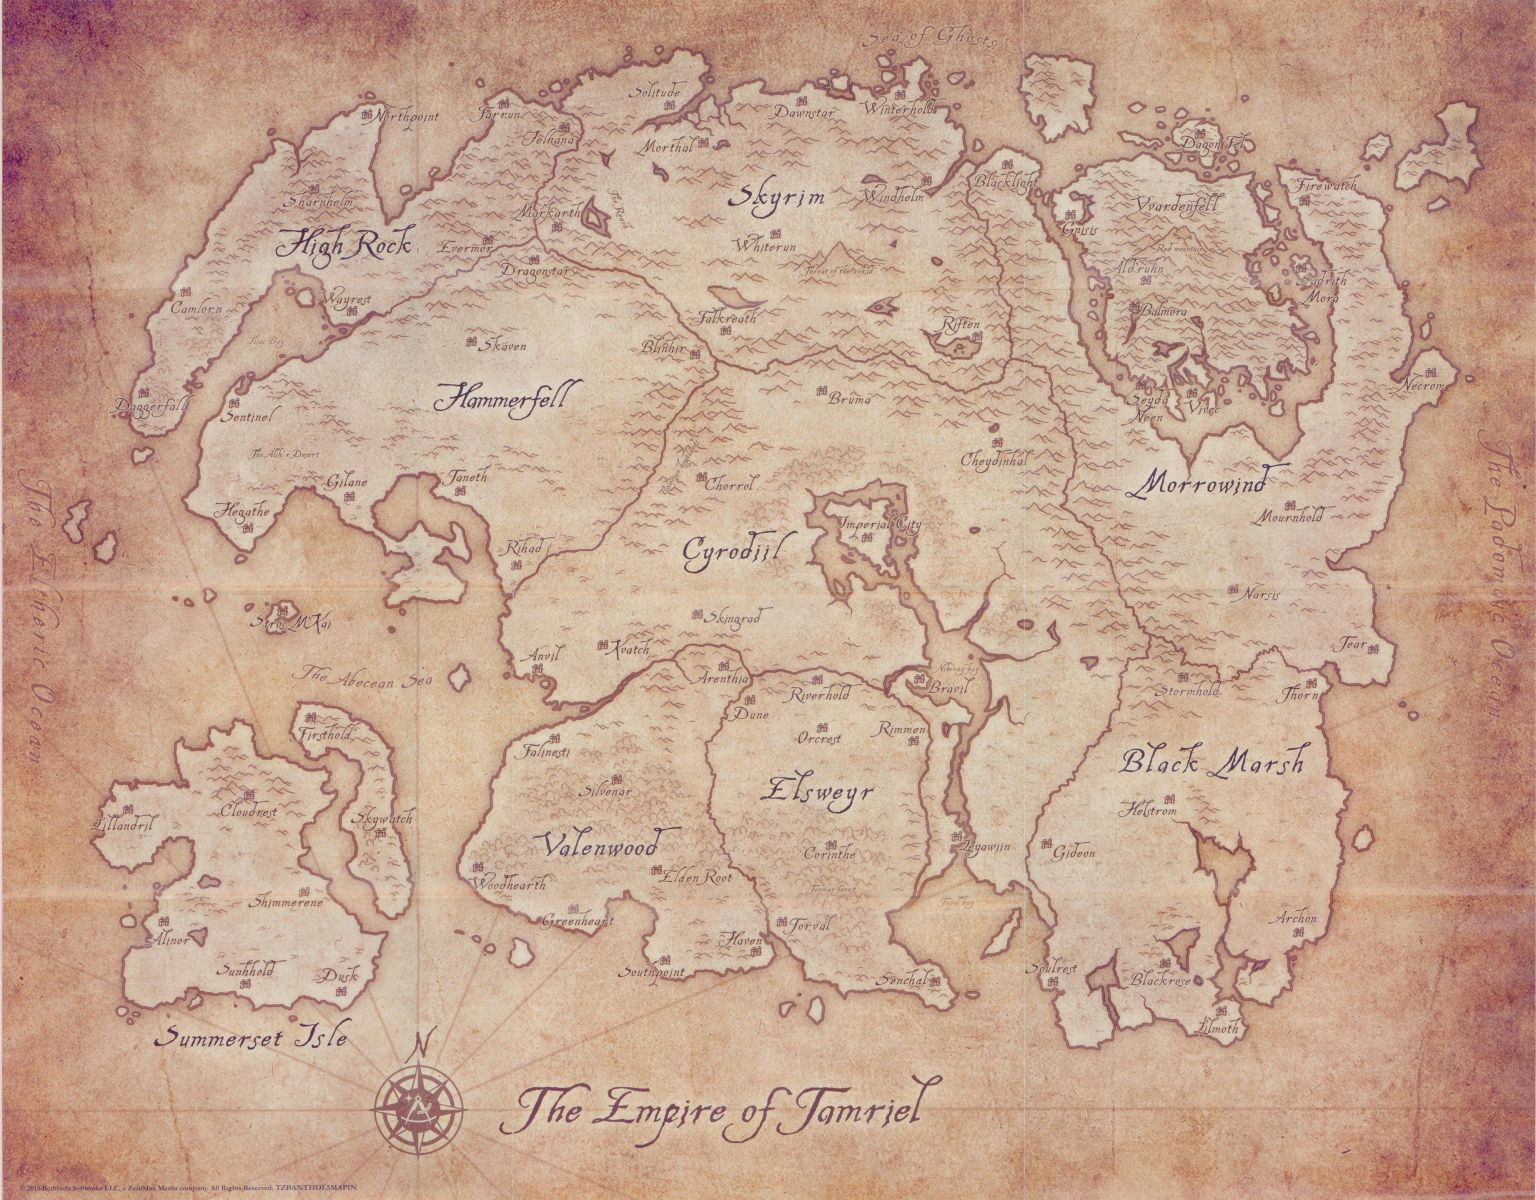 The Elder Scrolls map of Tamriel